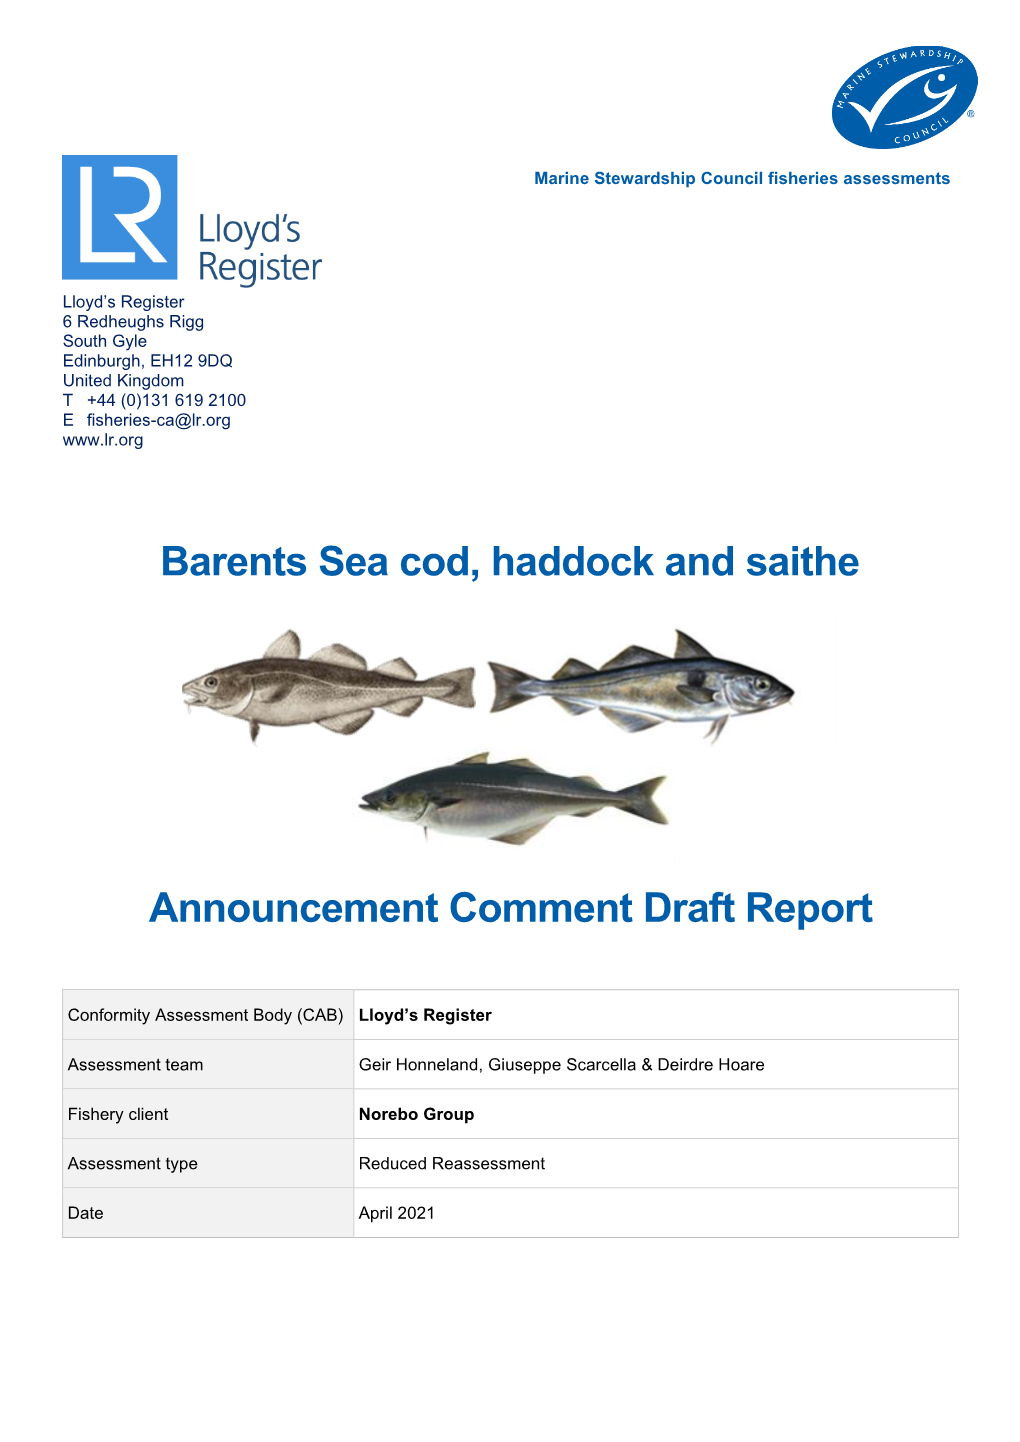 Announcement Comment Draft Report Barents Sea Cod, Haddock and Saithe Assessment Data Sheet